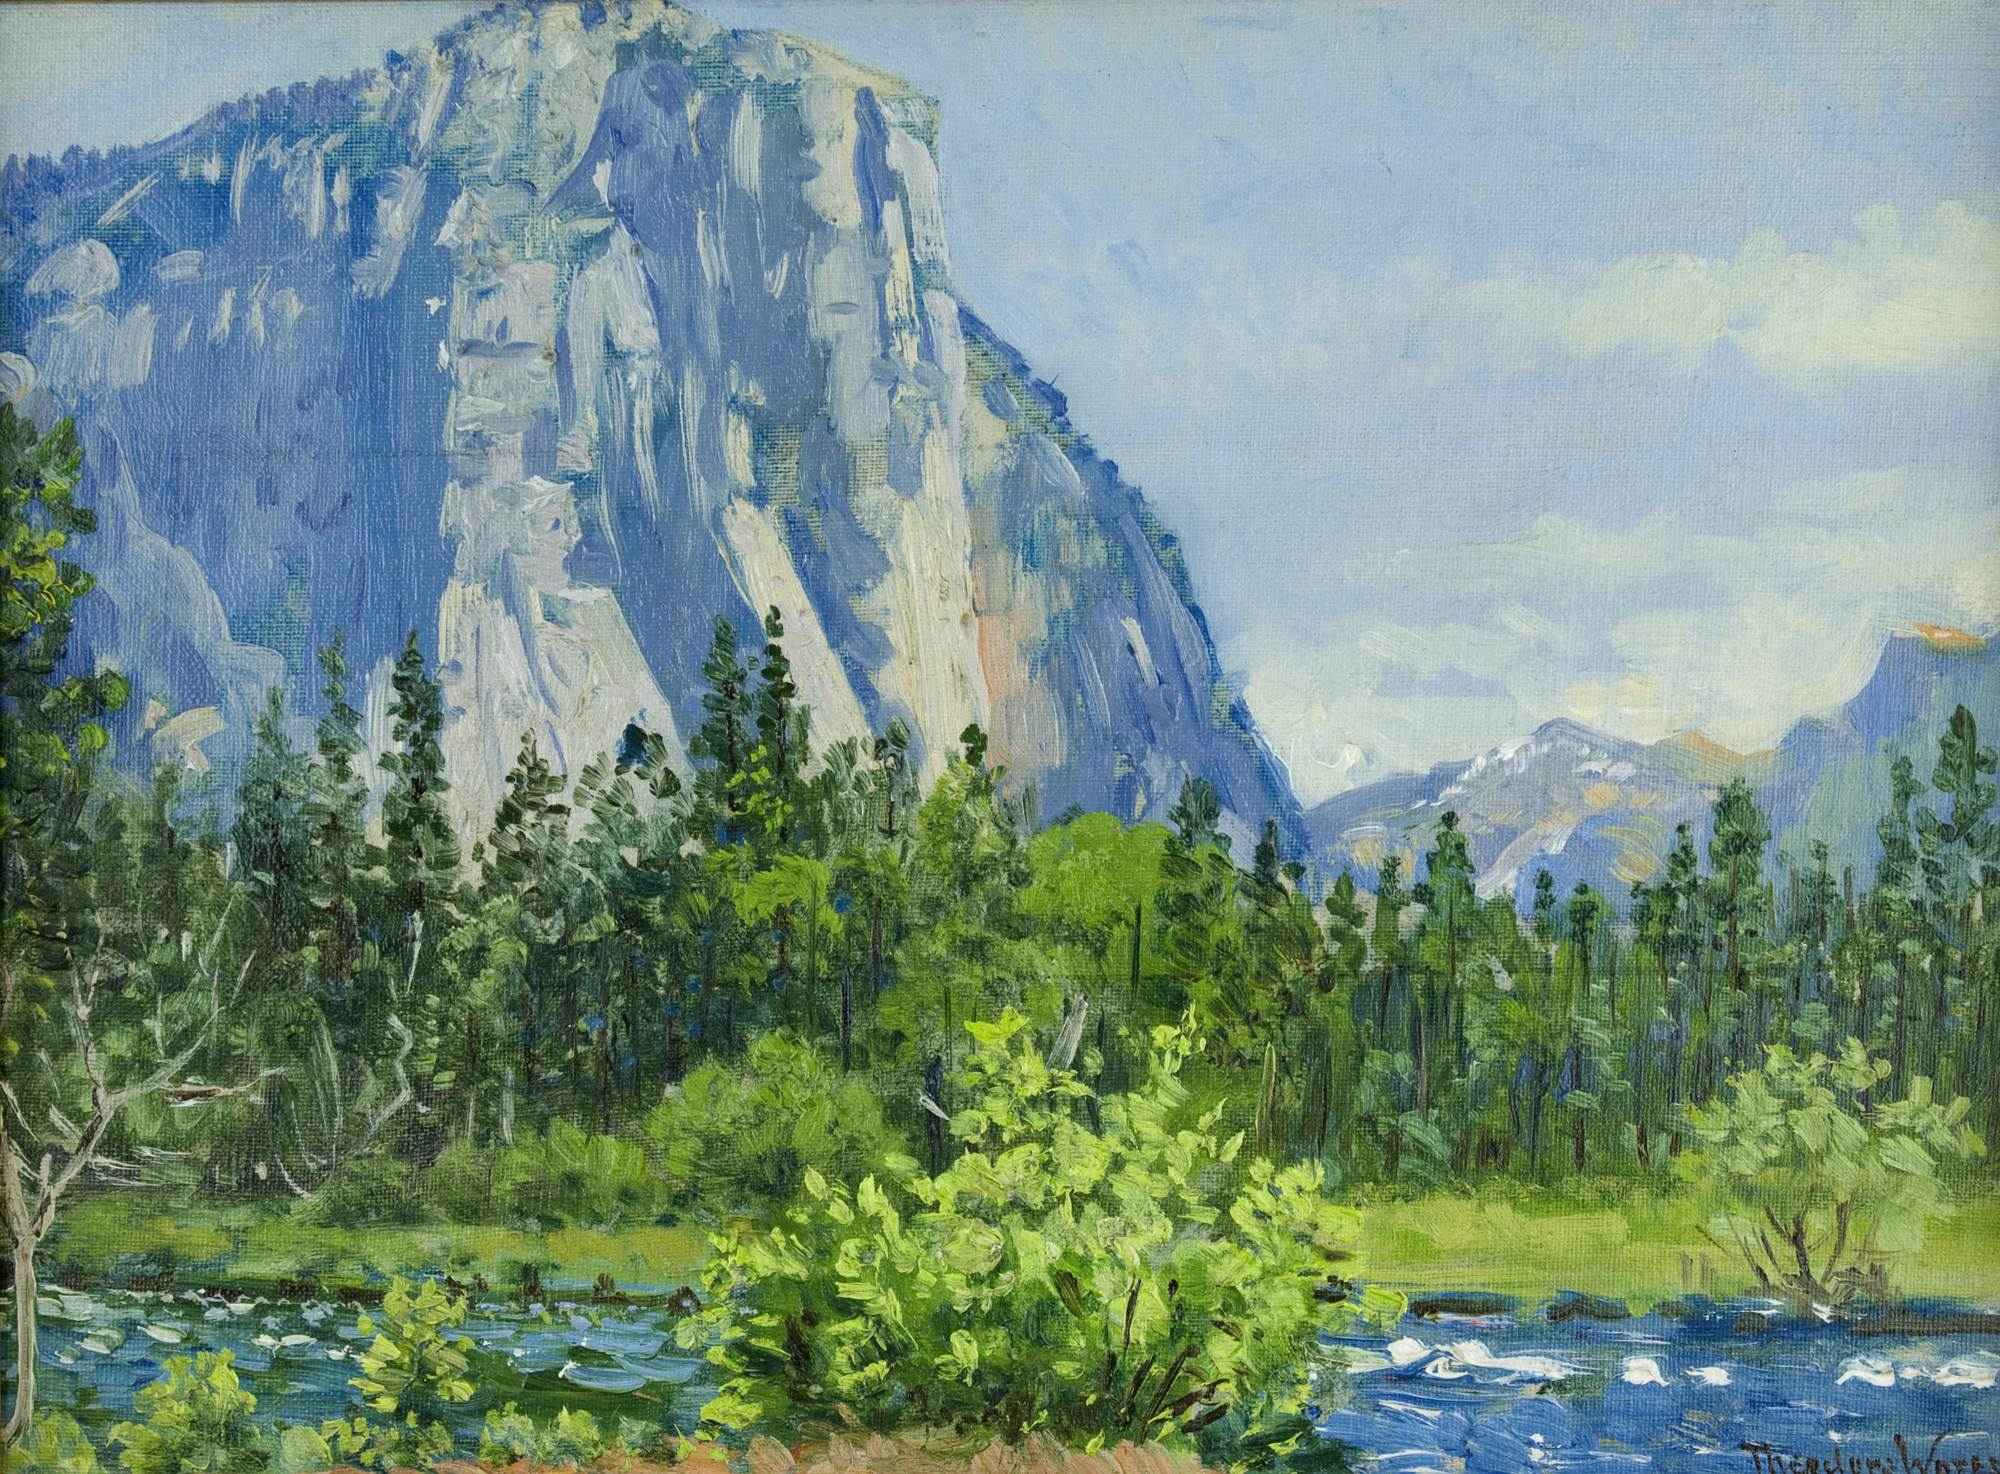 Painting El Capitan, Yosemite